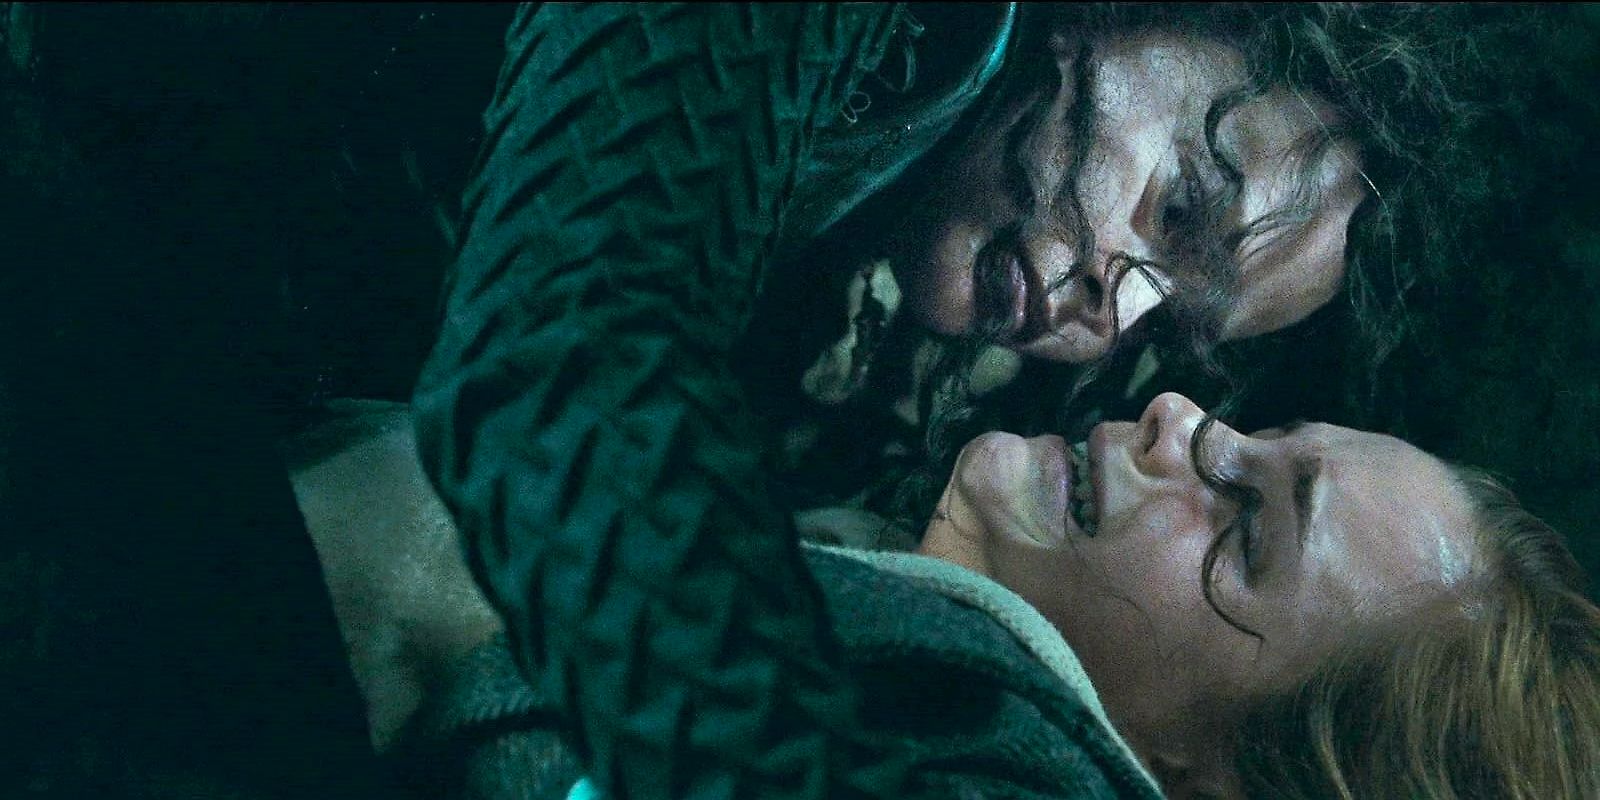 Bellatrix Lestranage tortures Hermione Granger with the Cruciatus Curse.